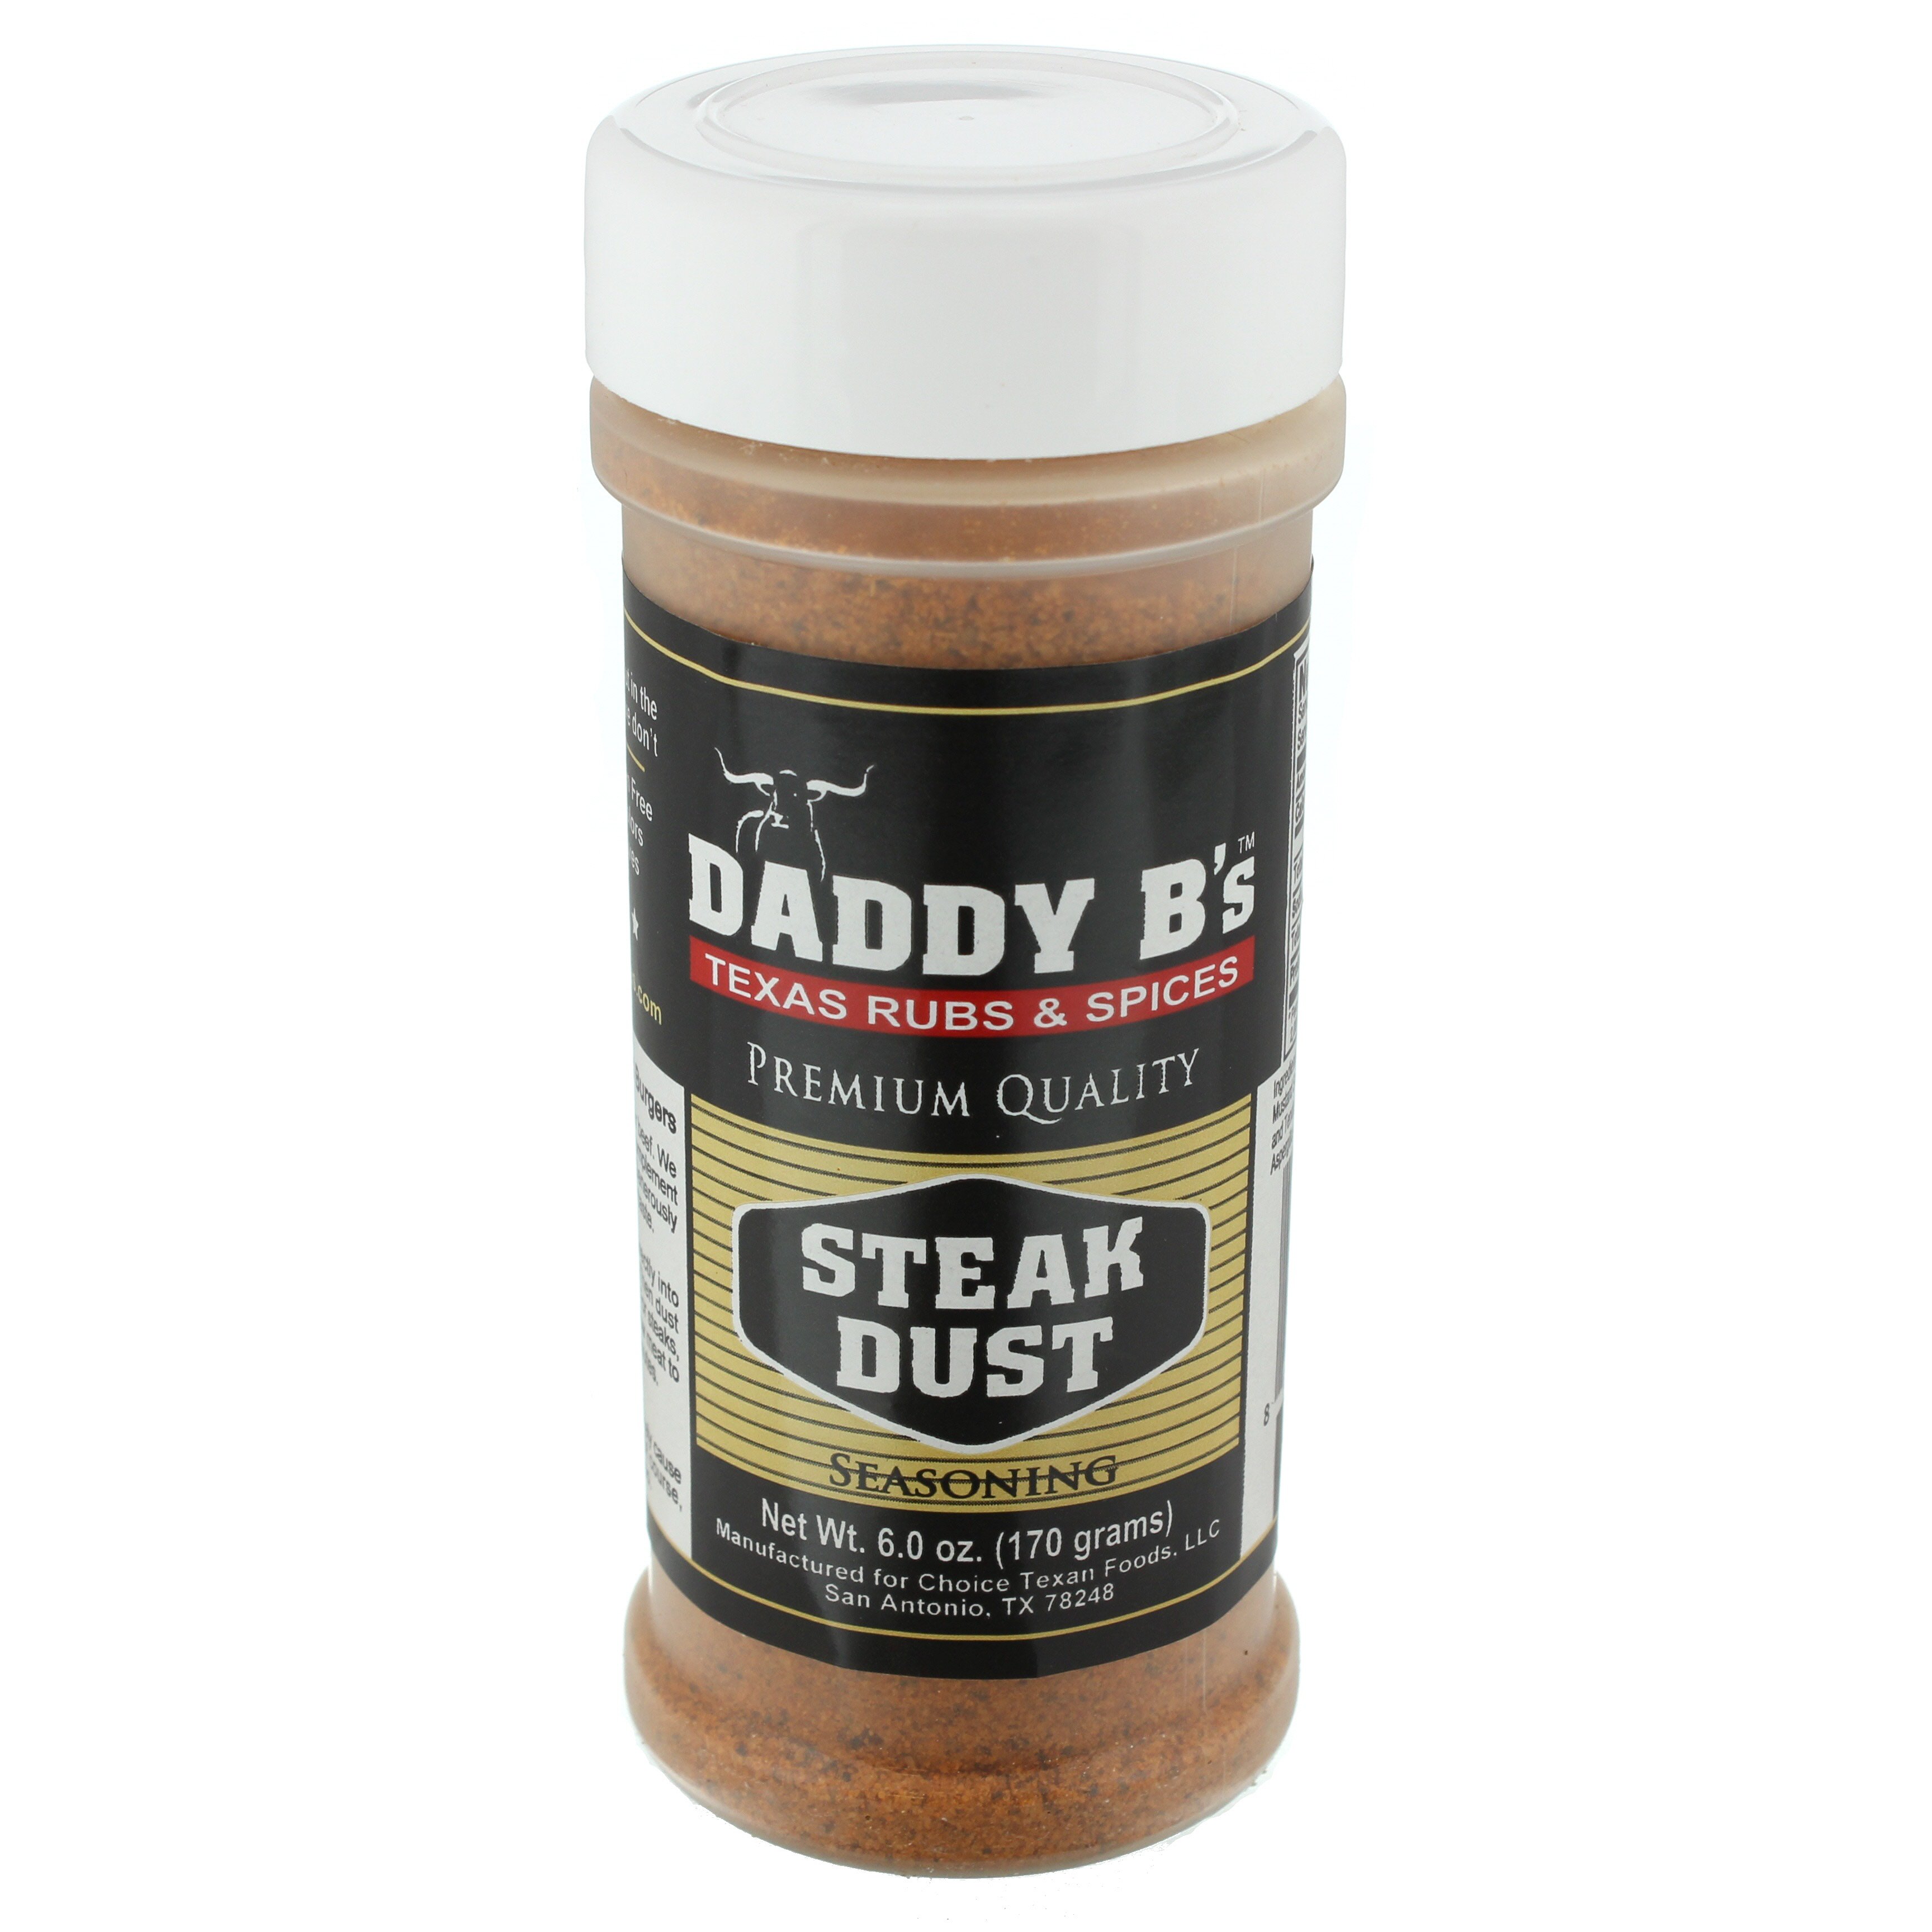 Daddy B's Steak Dust Seasoning - Shop Spice Mixes at H-E-B